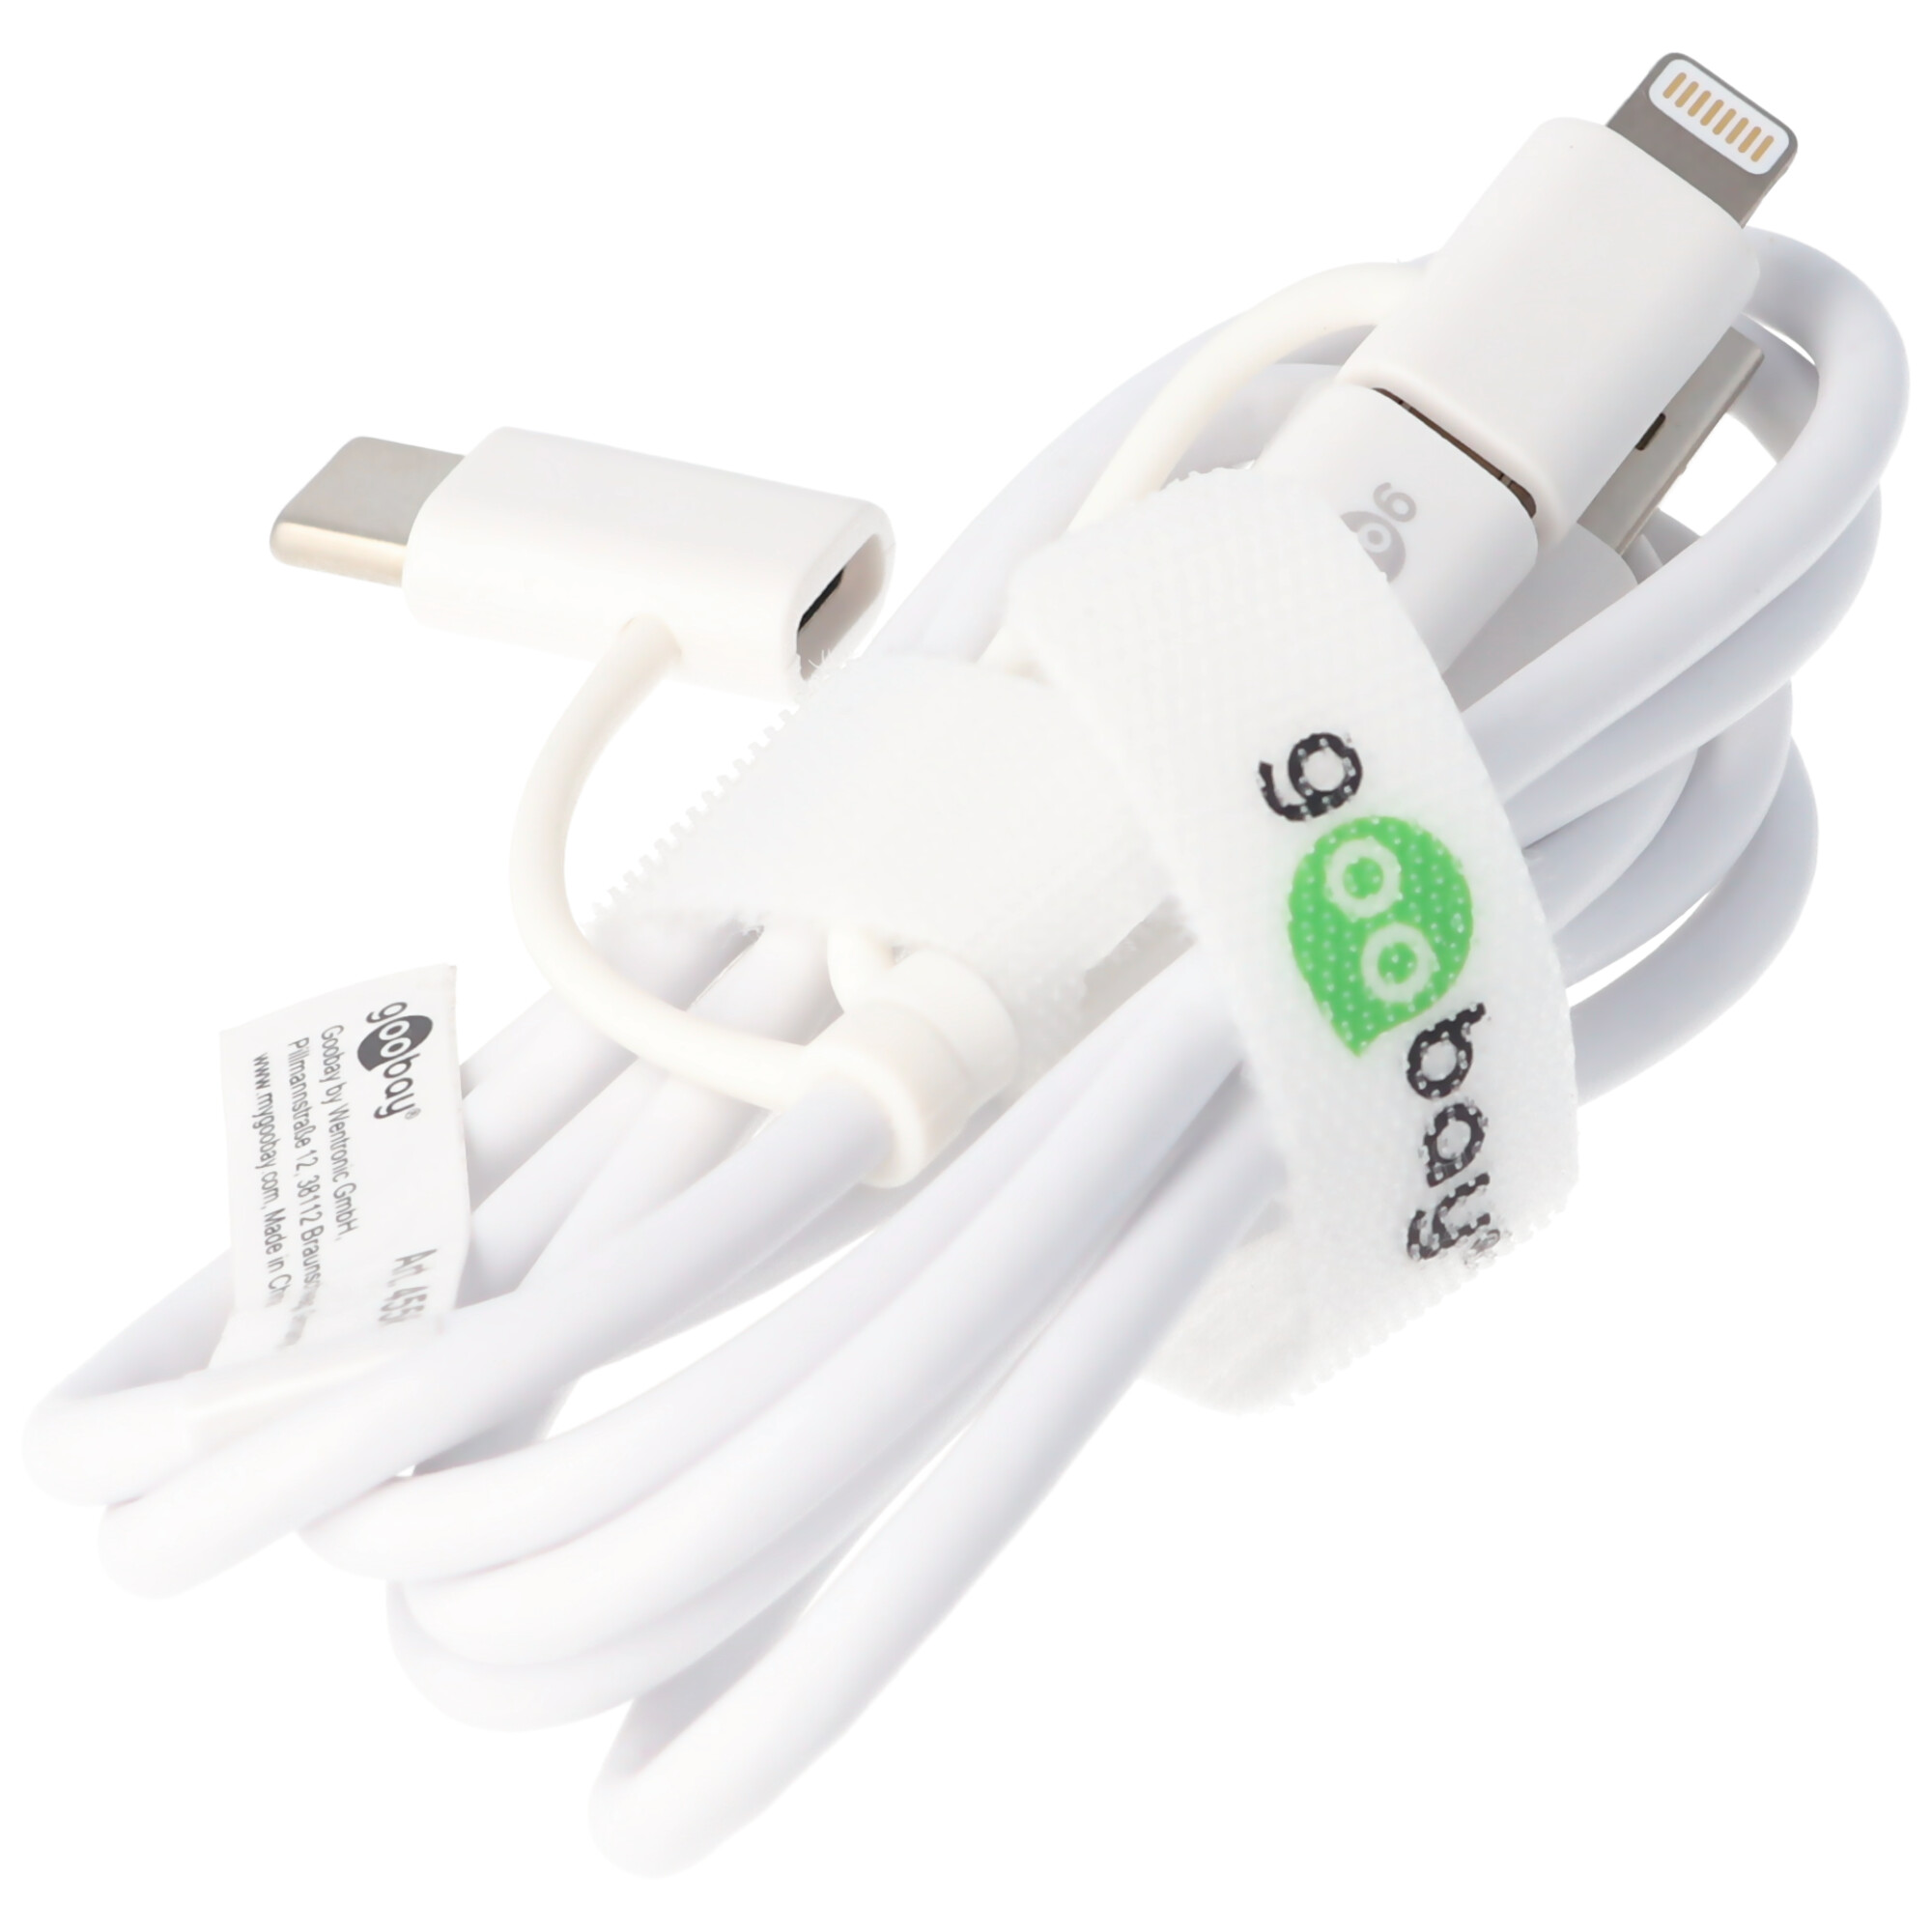 3in1 Kombi-Kabel mit Micro USB, USB-C und Apple Lightning Anschluss